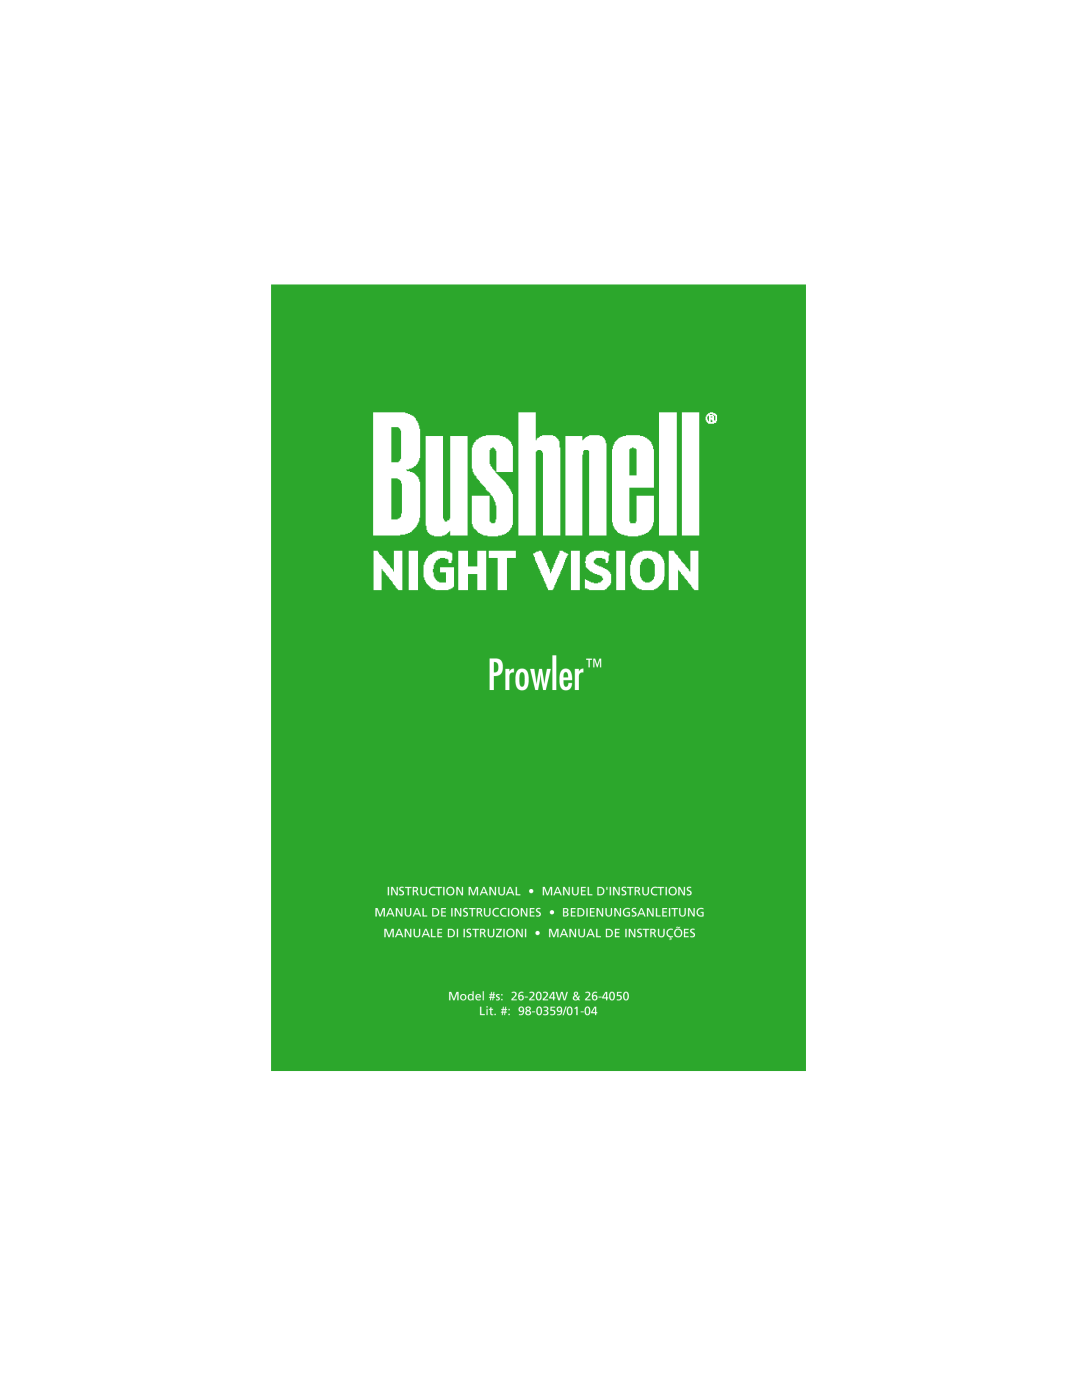 Bushnell 26-4050, 26-2024W instruction manual Prowler, Manual De Instrucciones Bedienungsanleitung 